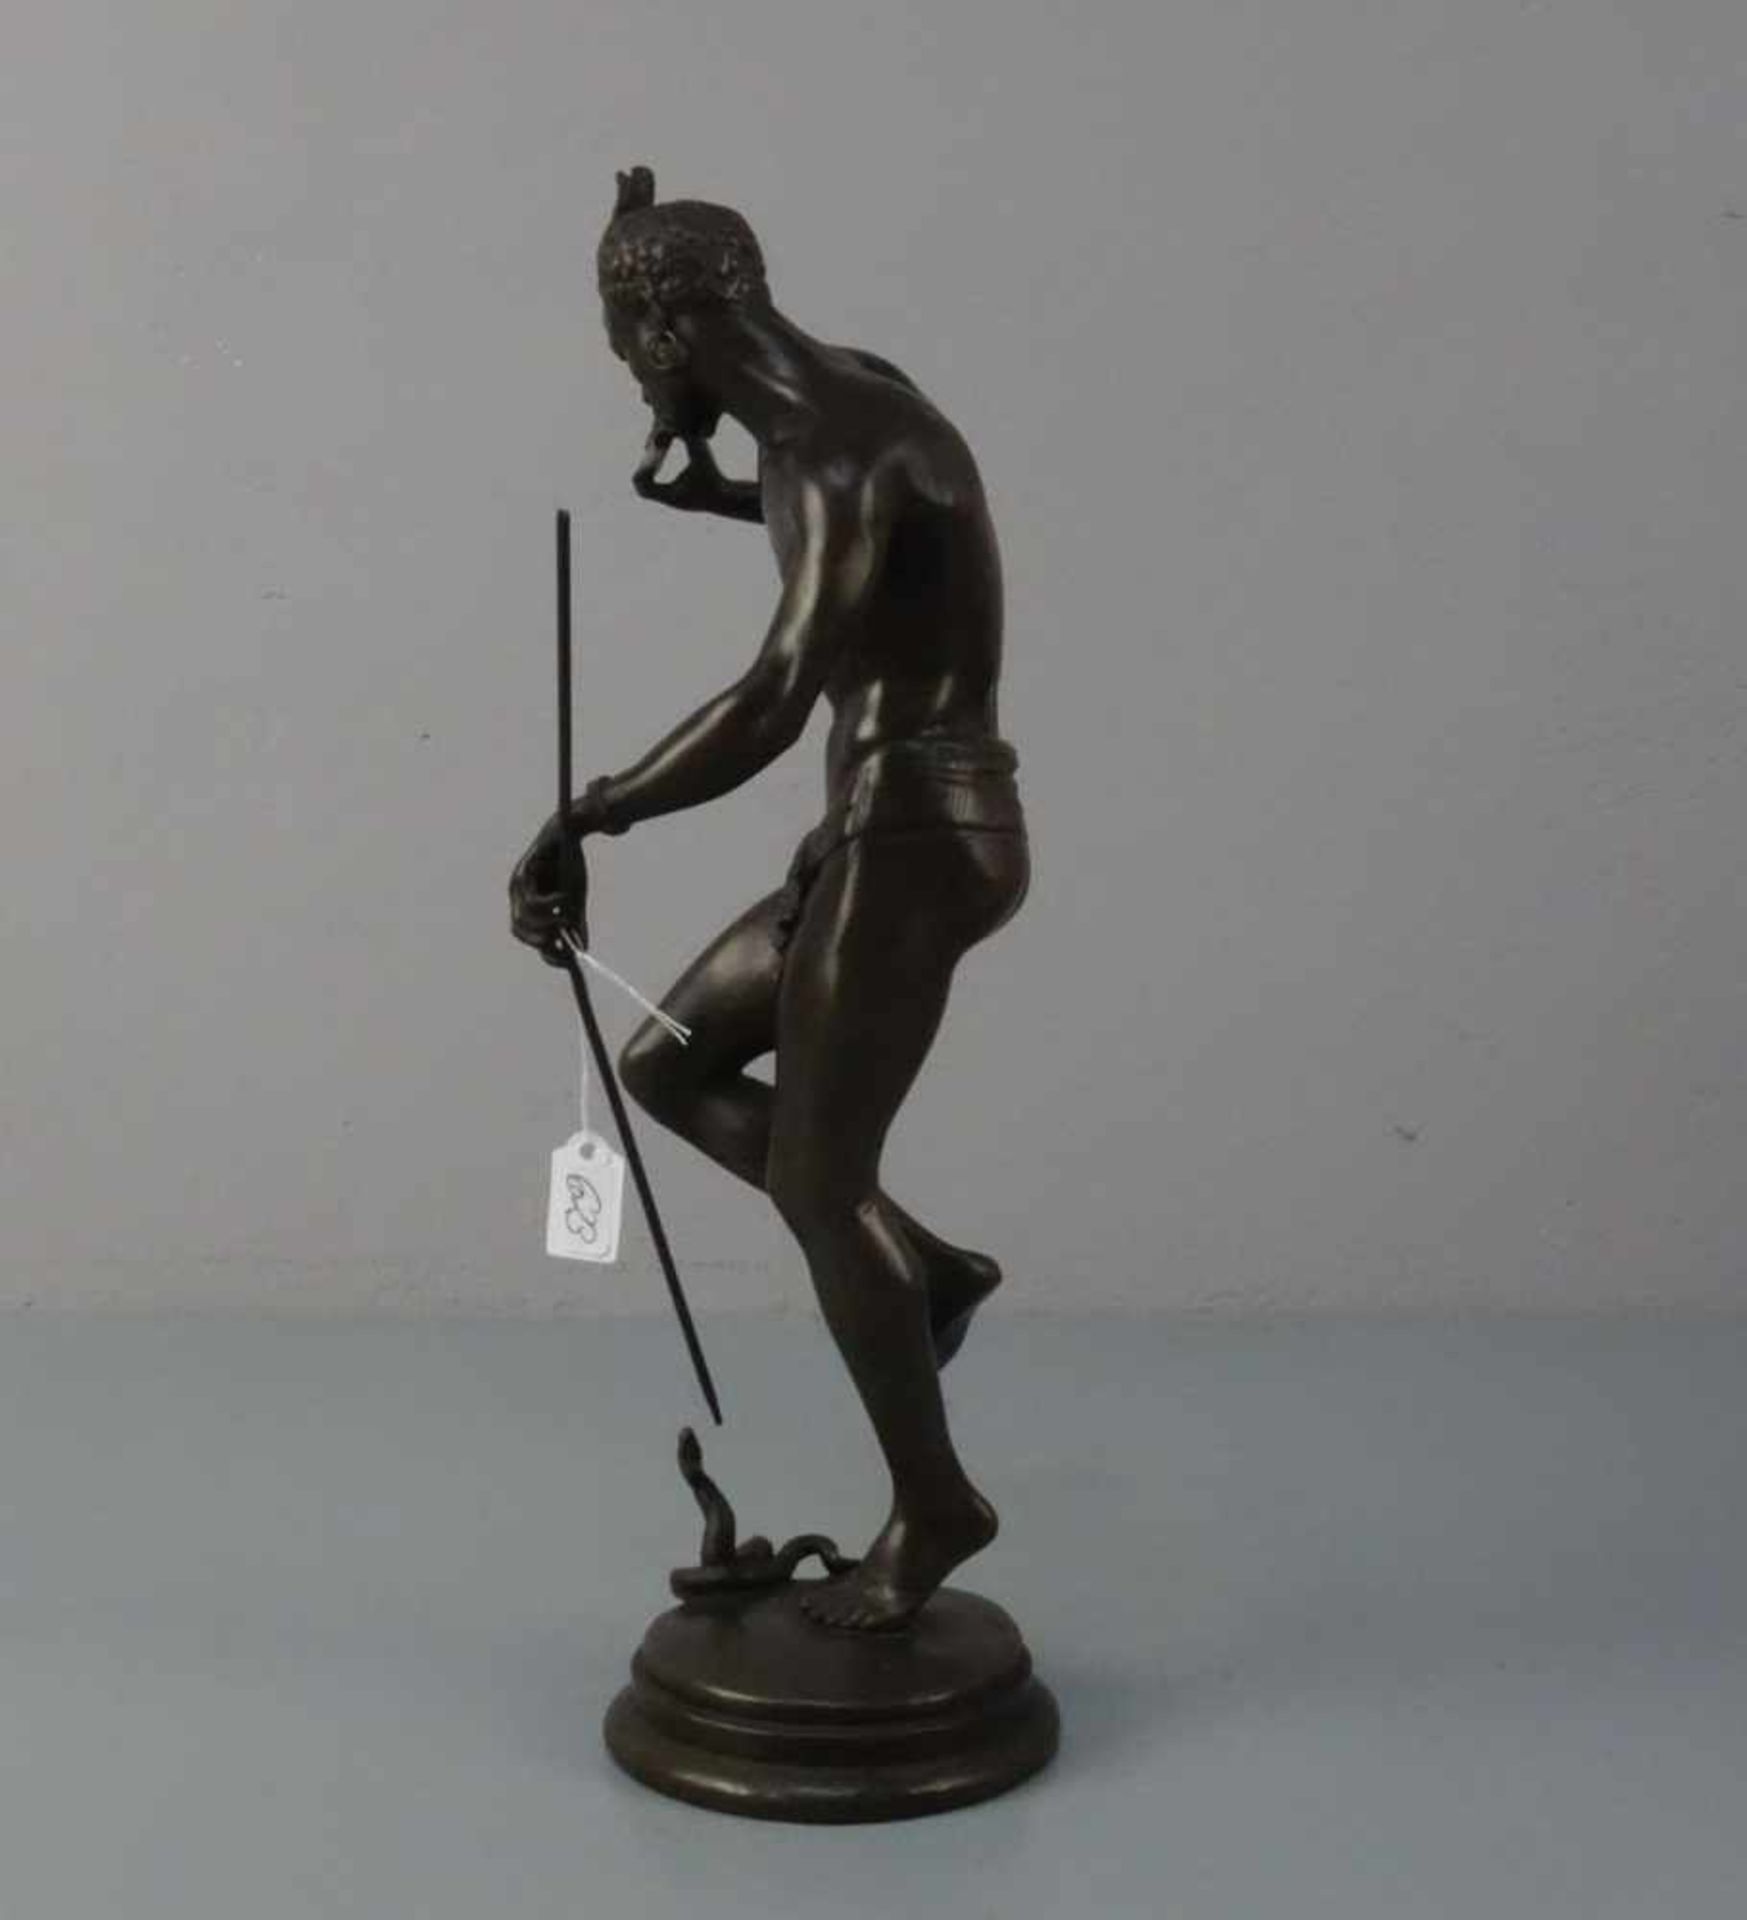 BOURGEOIS, CHARLES ARTHUR (1838-1886), Skulptur / sculpture: "Schlangenbeschwörer" / "Nubischer - Image 3 of 6